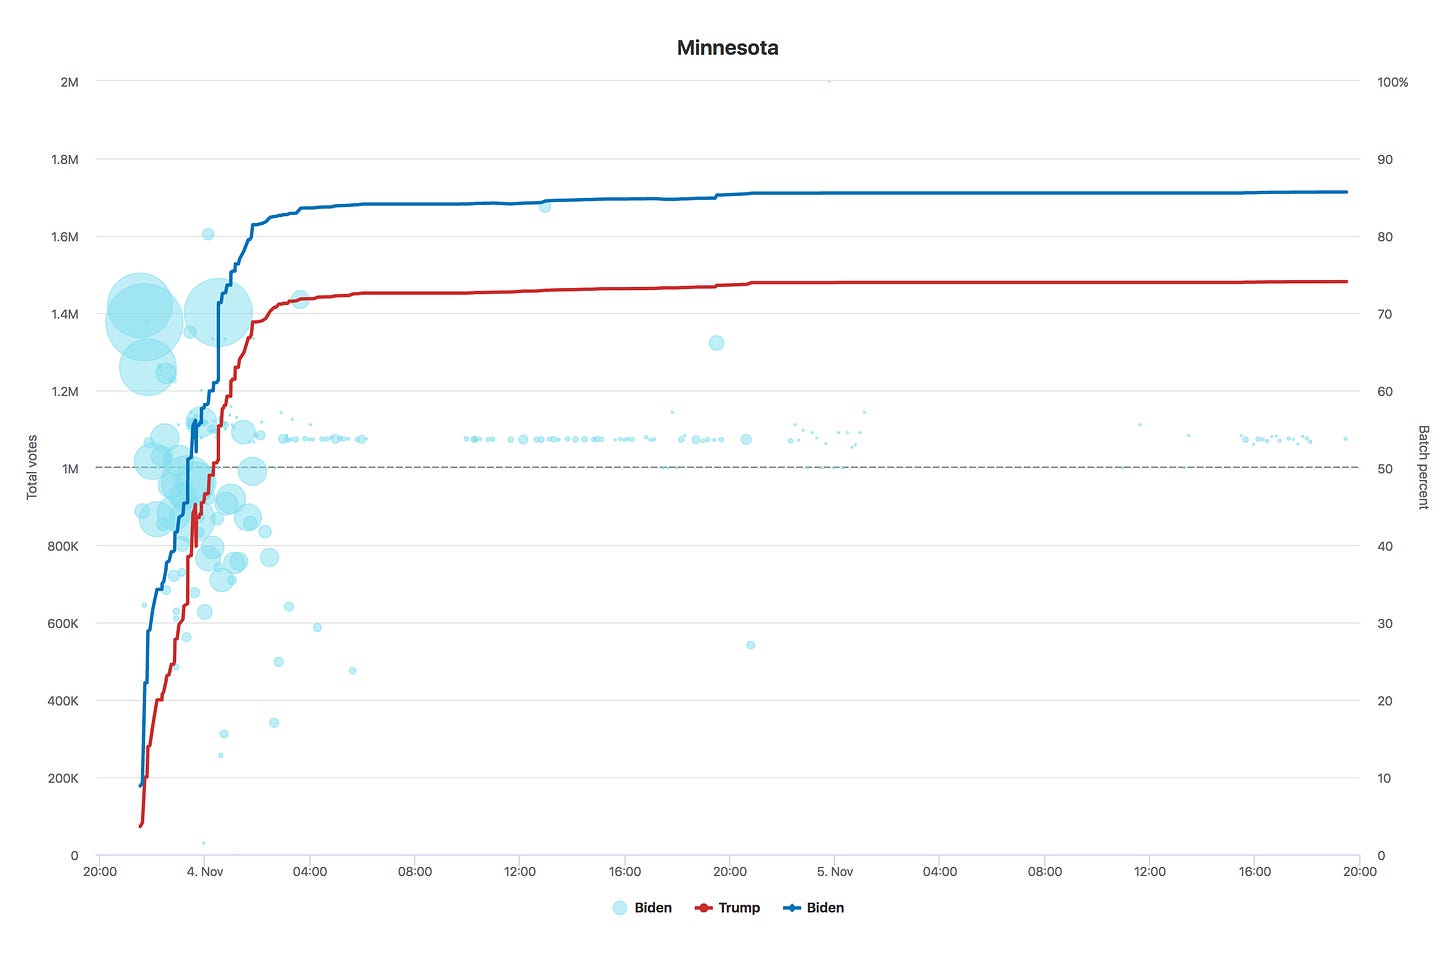 Chart of Minnesota voting data over time